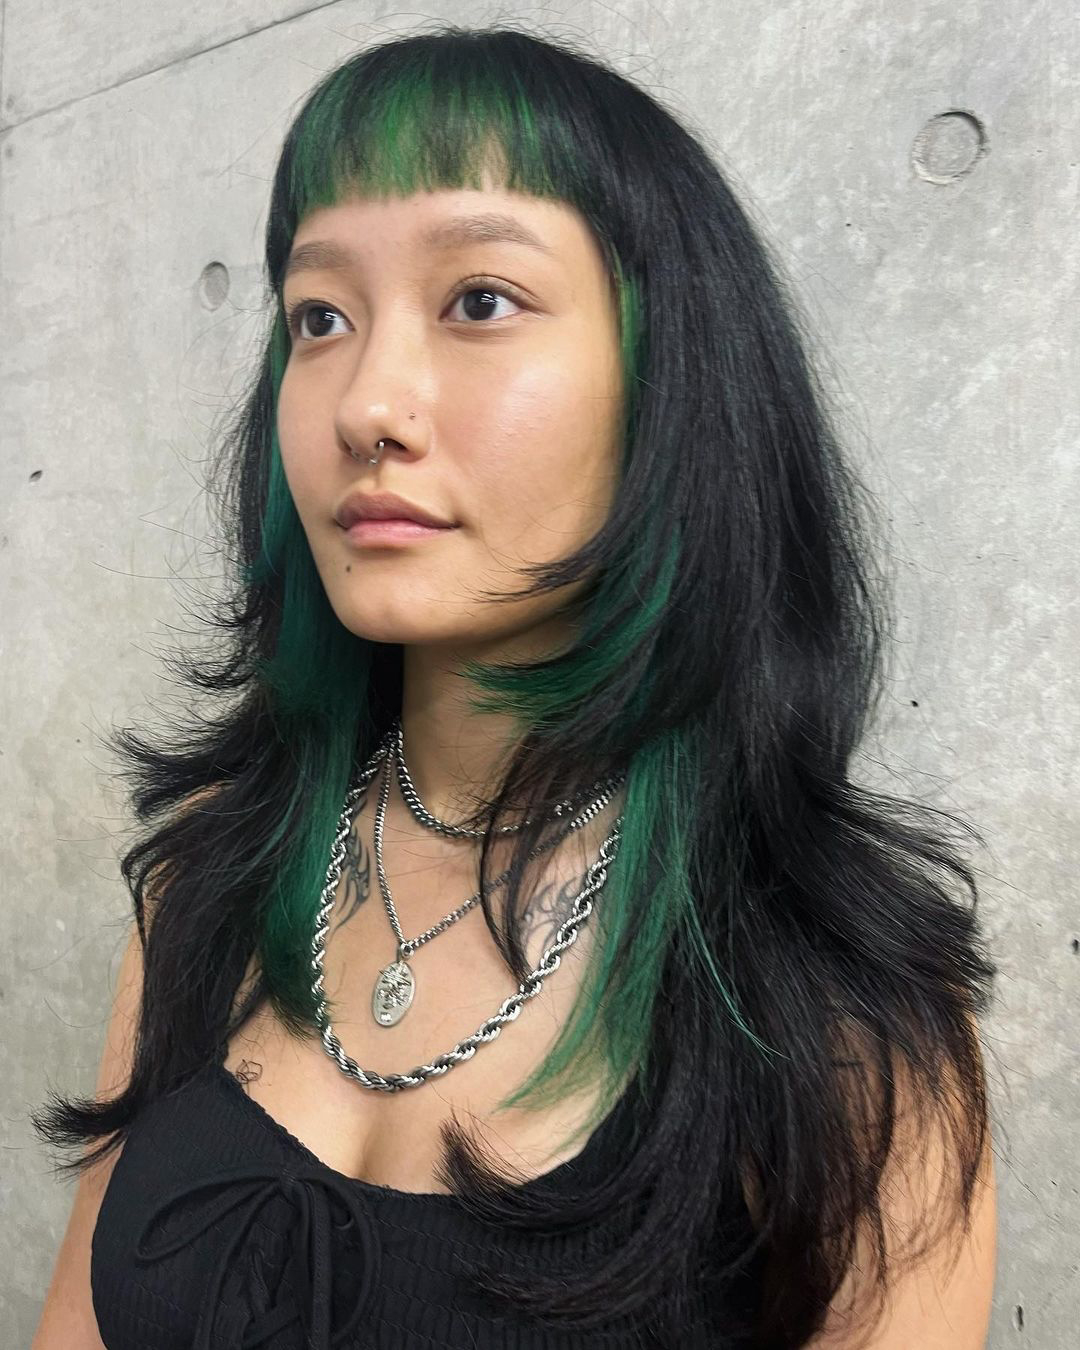 hush cut long hair with bangs green